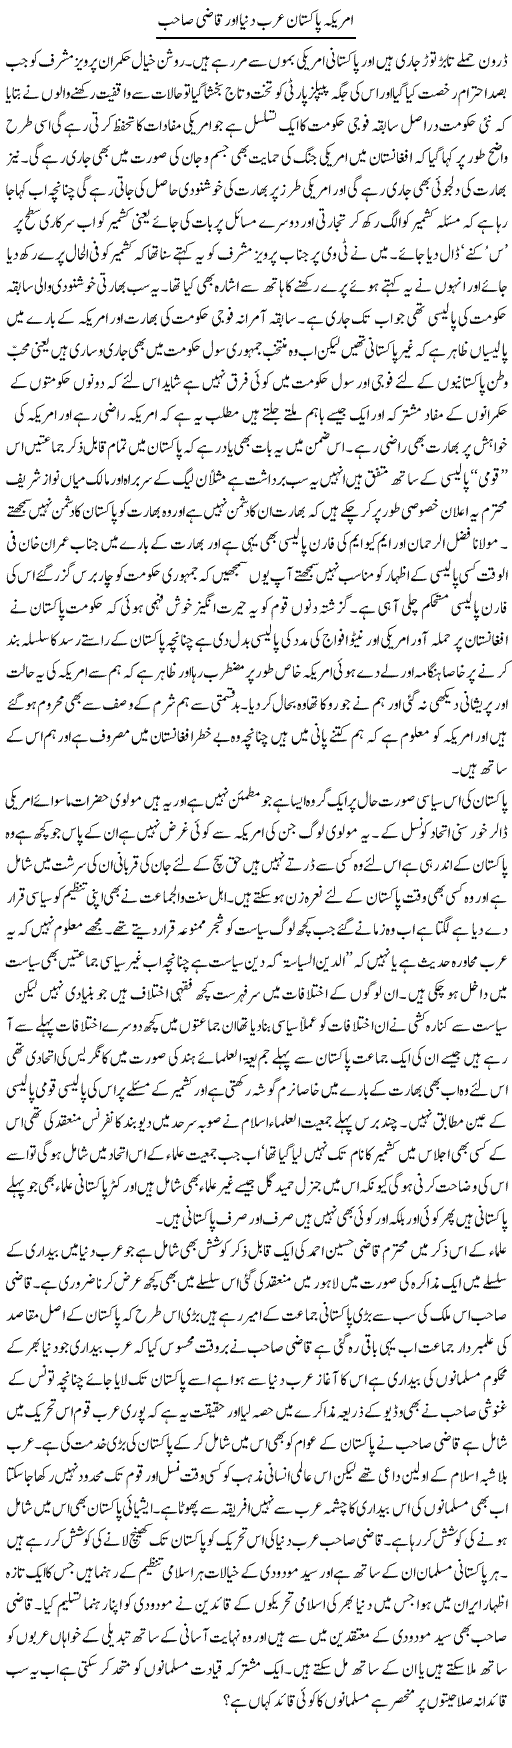 Pakistan and Arabs Express Column Abdul Qadir 18 February 2012